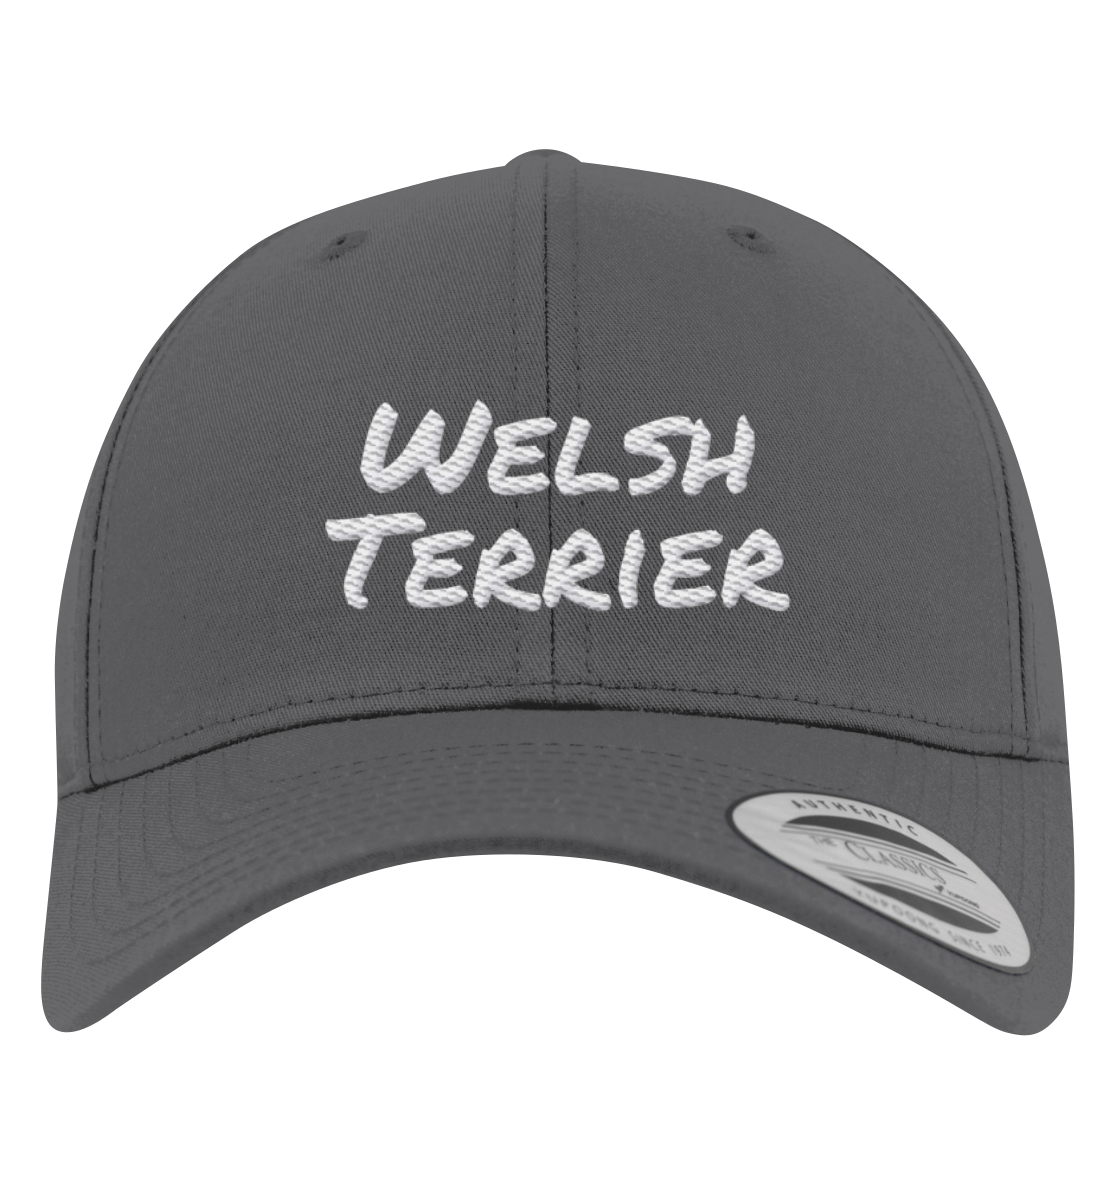 Welsh Terrier - Premium Baseball Cap